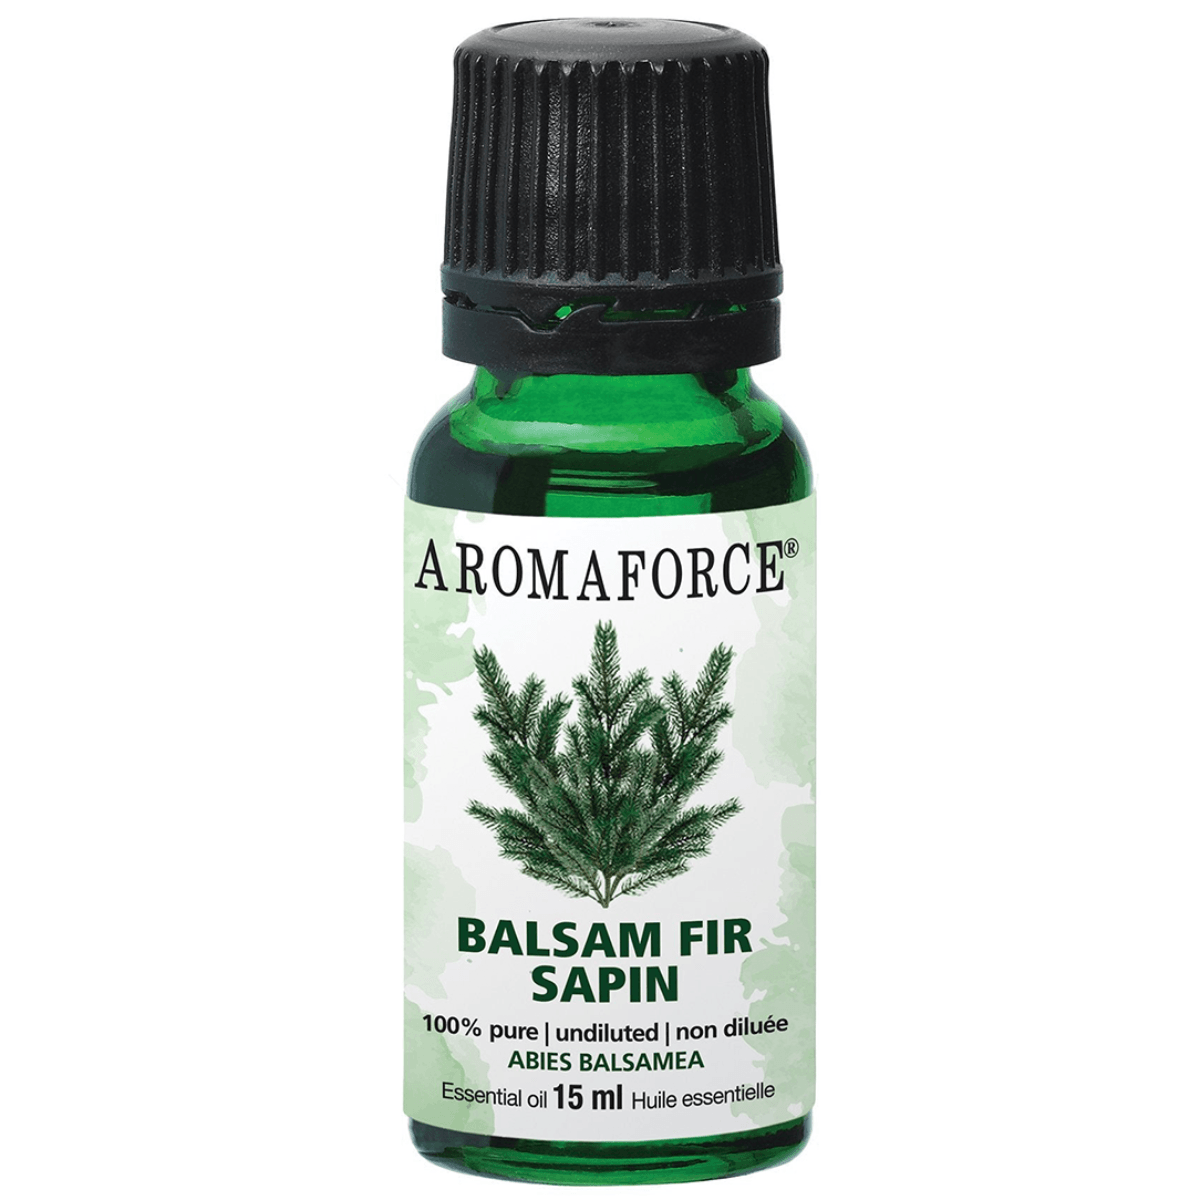 Aromaforce Balsam Fir Essential Oil 15ML Essential Oils at Village Vitamin Store